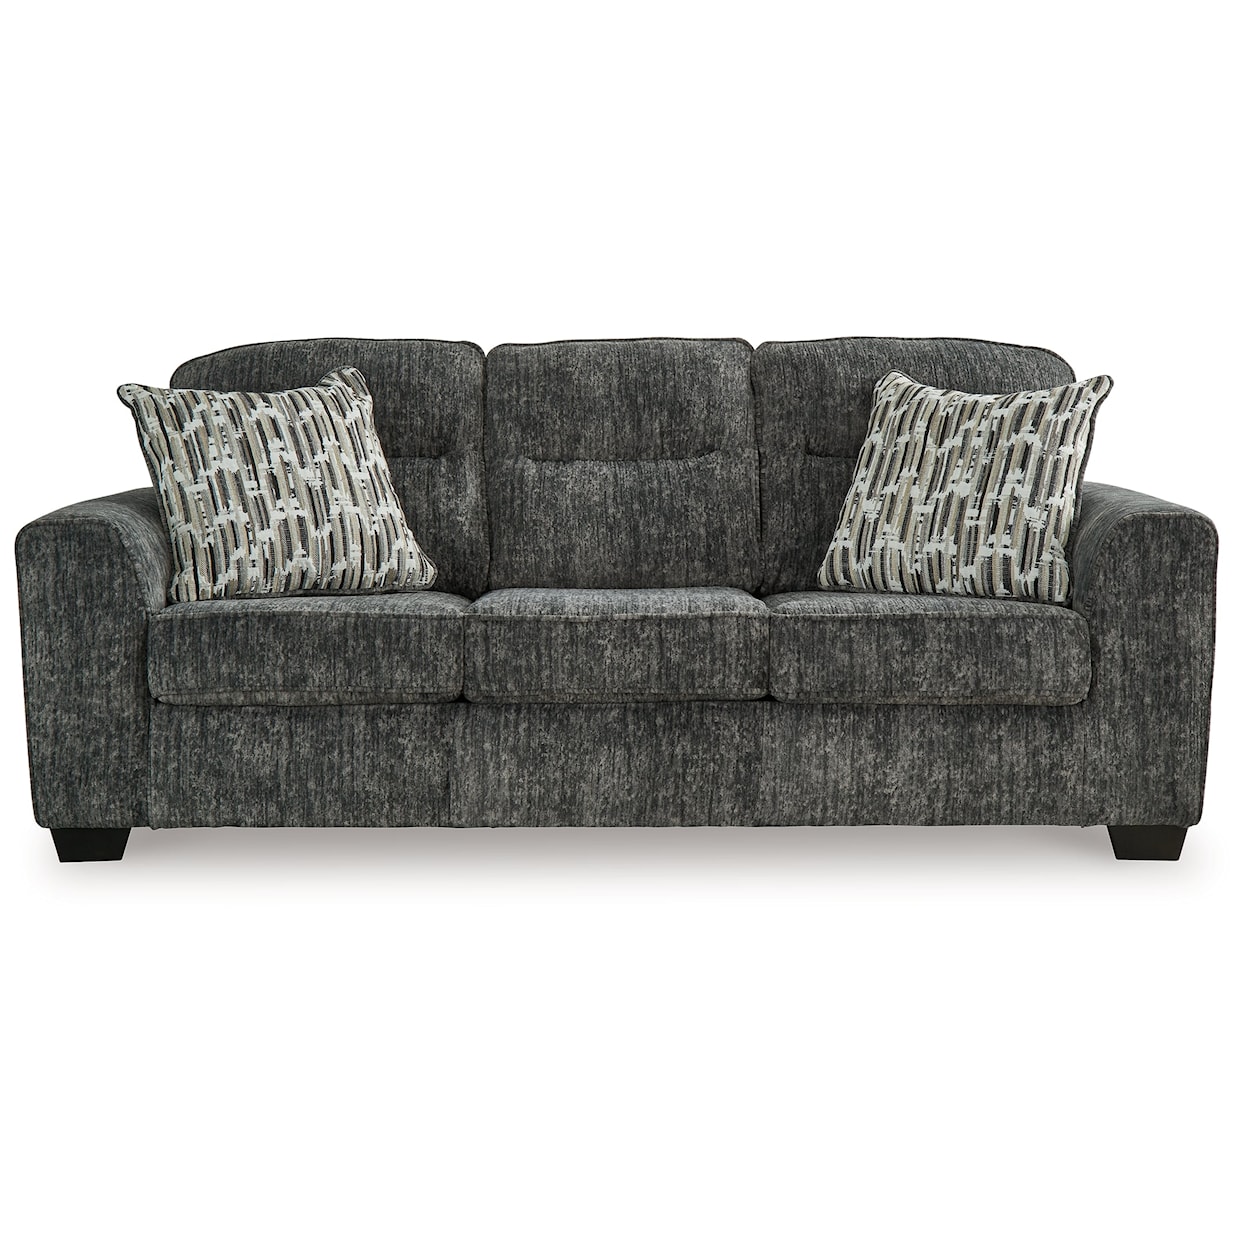 StyleLine Lonoke Sofa